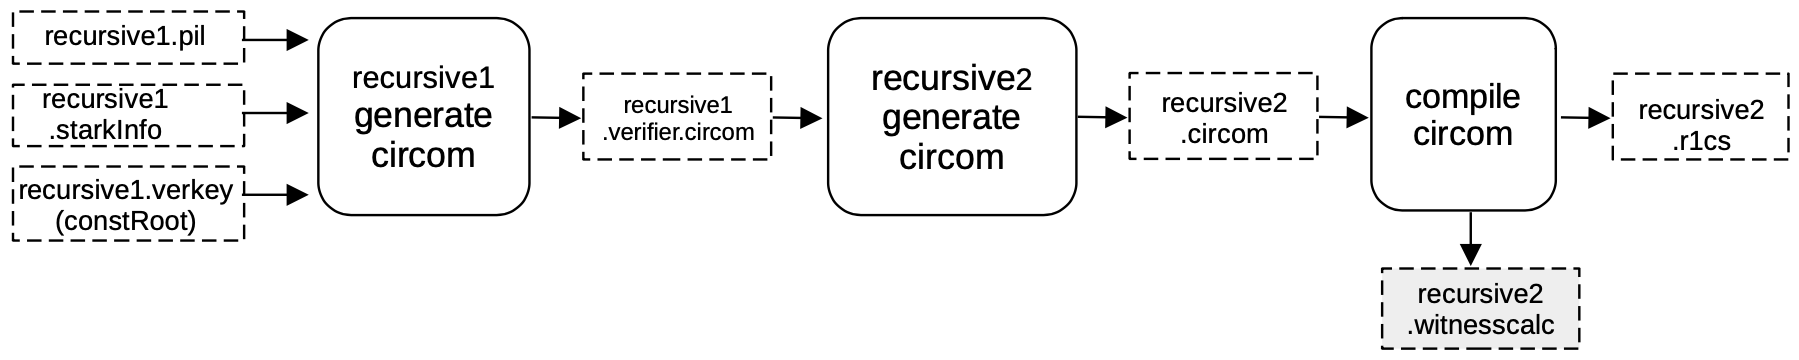 Convert the recursive1 STARK to its verifier circuit called recursive2 